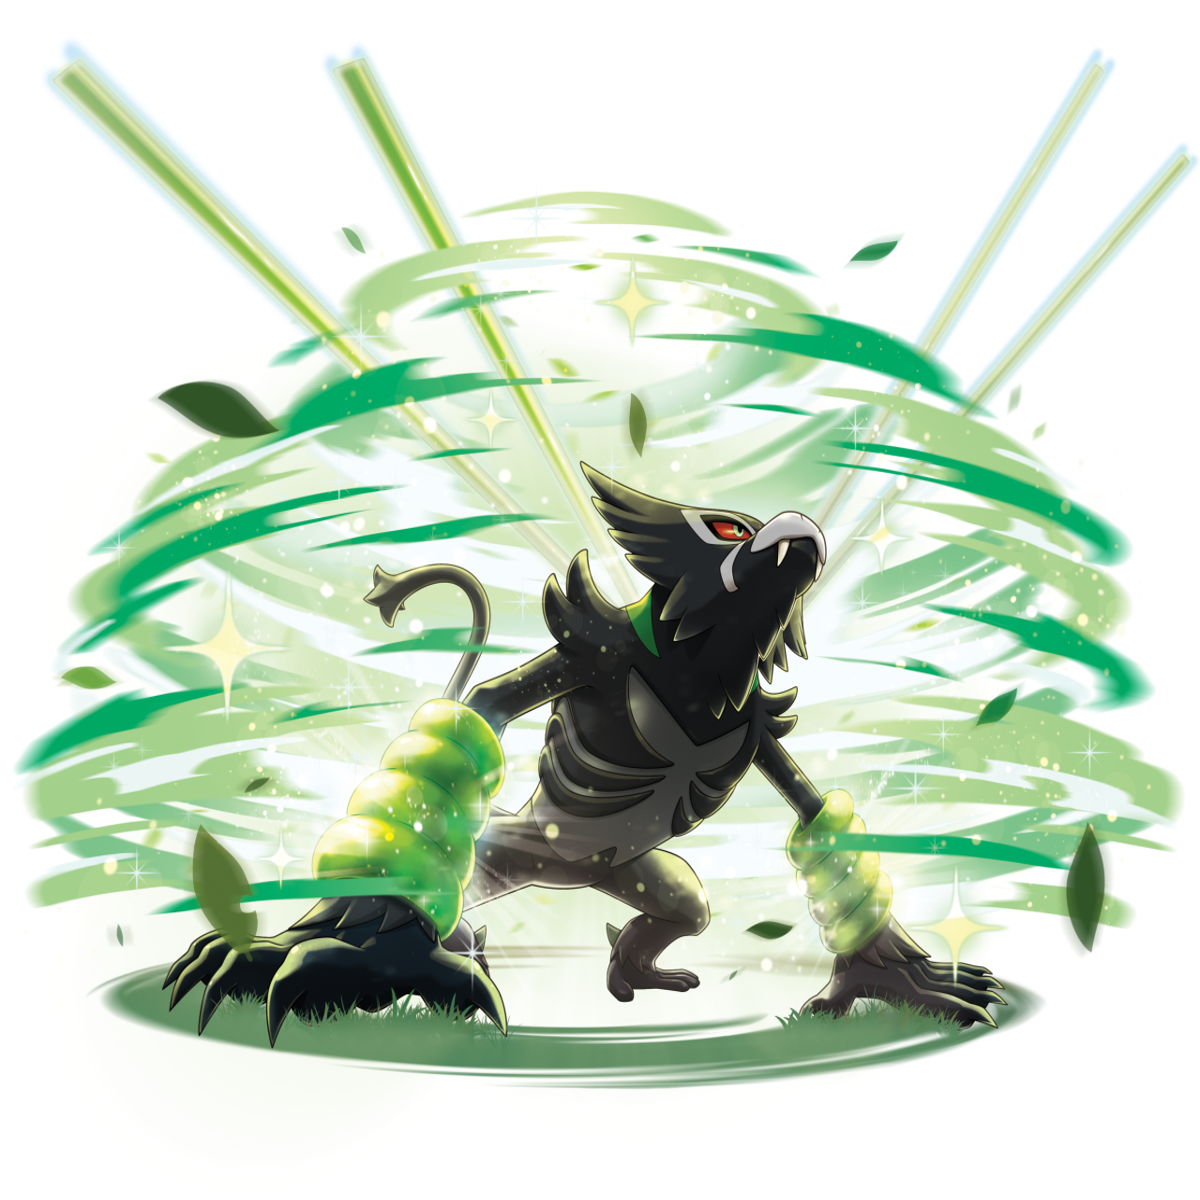 Pokemon Sword and Shield Mythical Zarude has a healing signature move